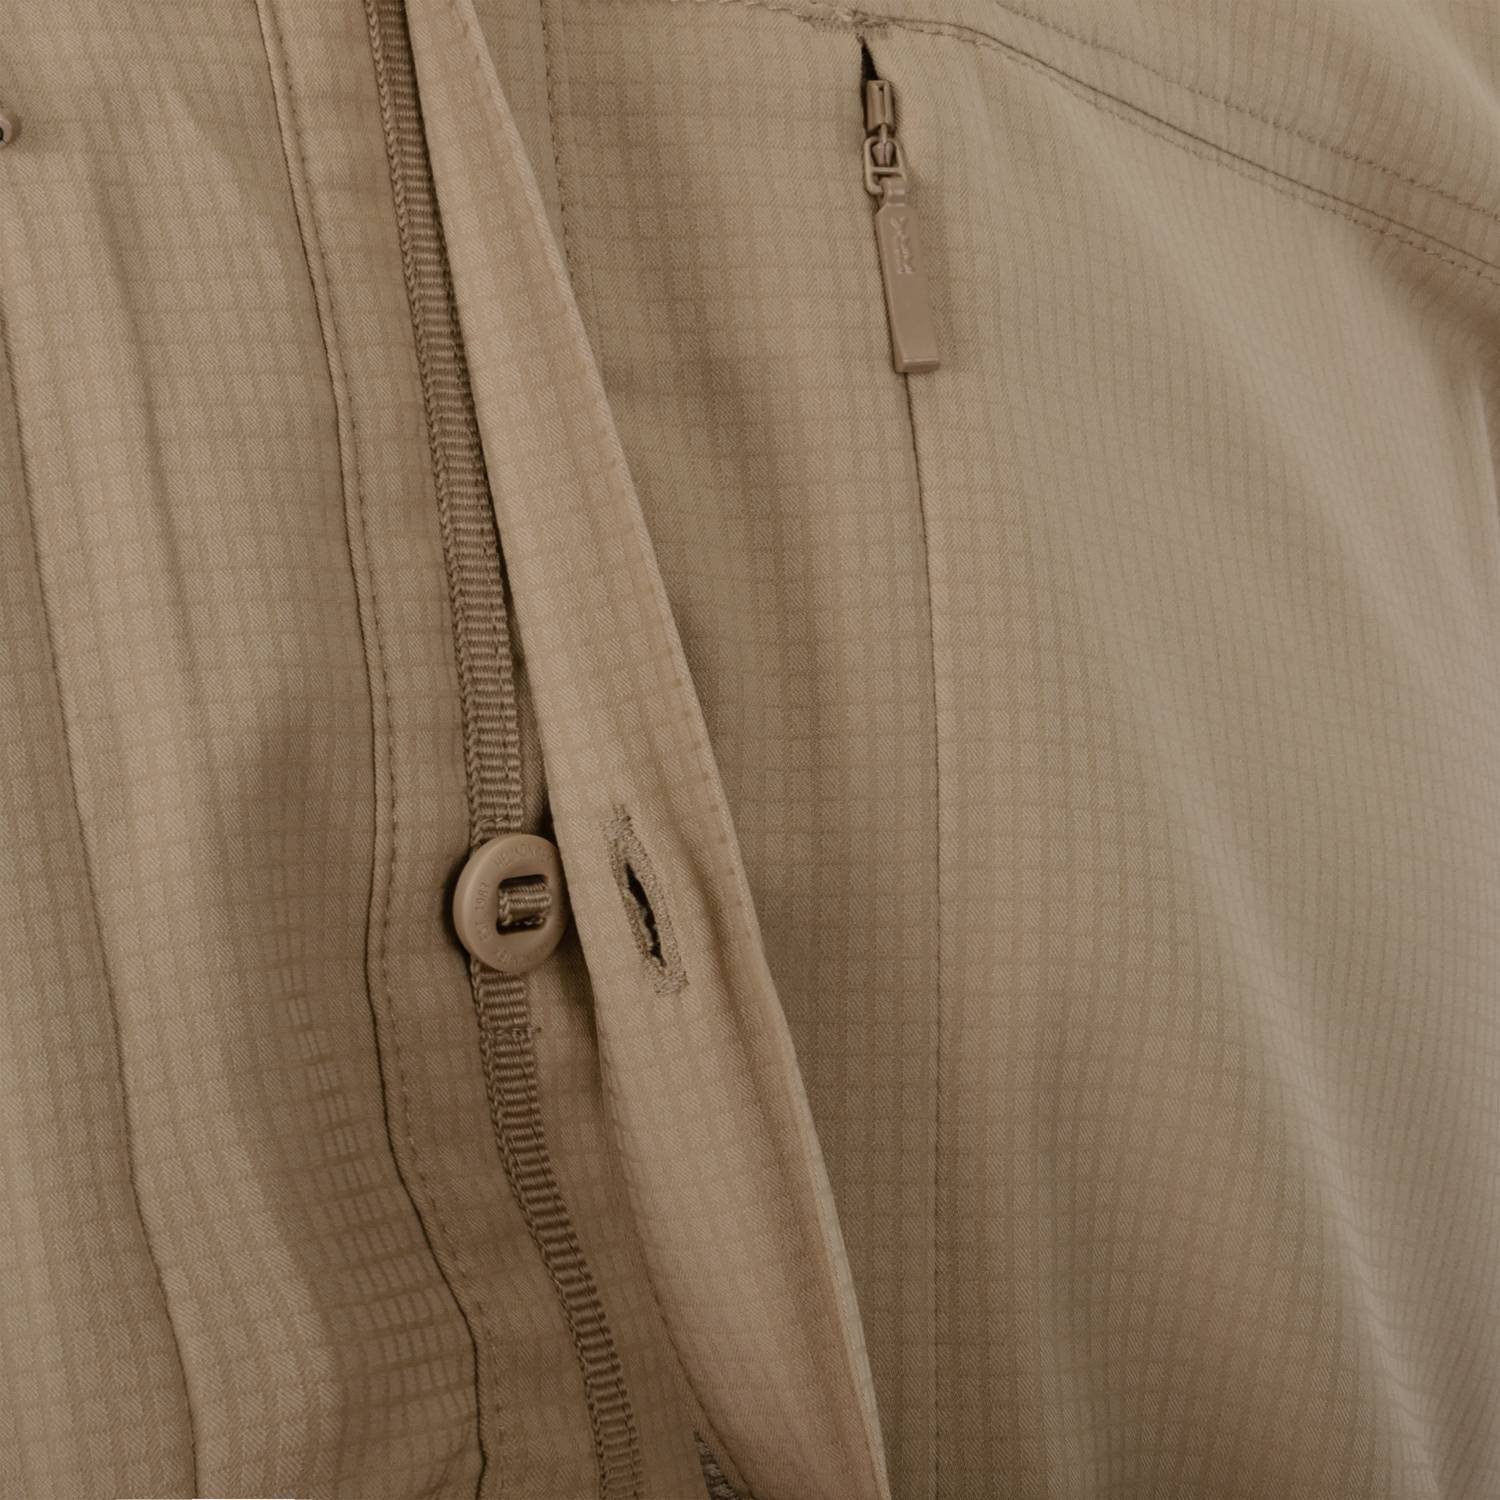 Shirt TRIP long sleeve SILVER MINK Helikon-Tex® KO-TRI-PS-69 L-11